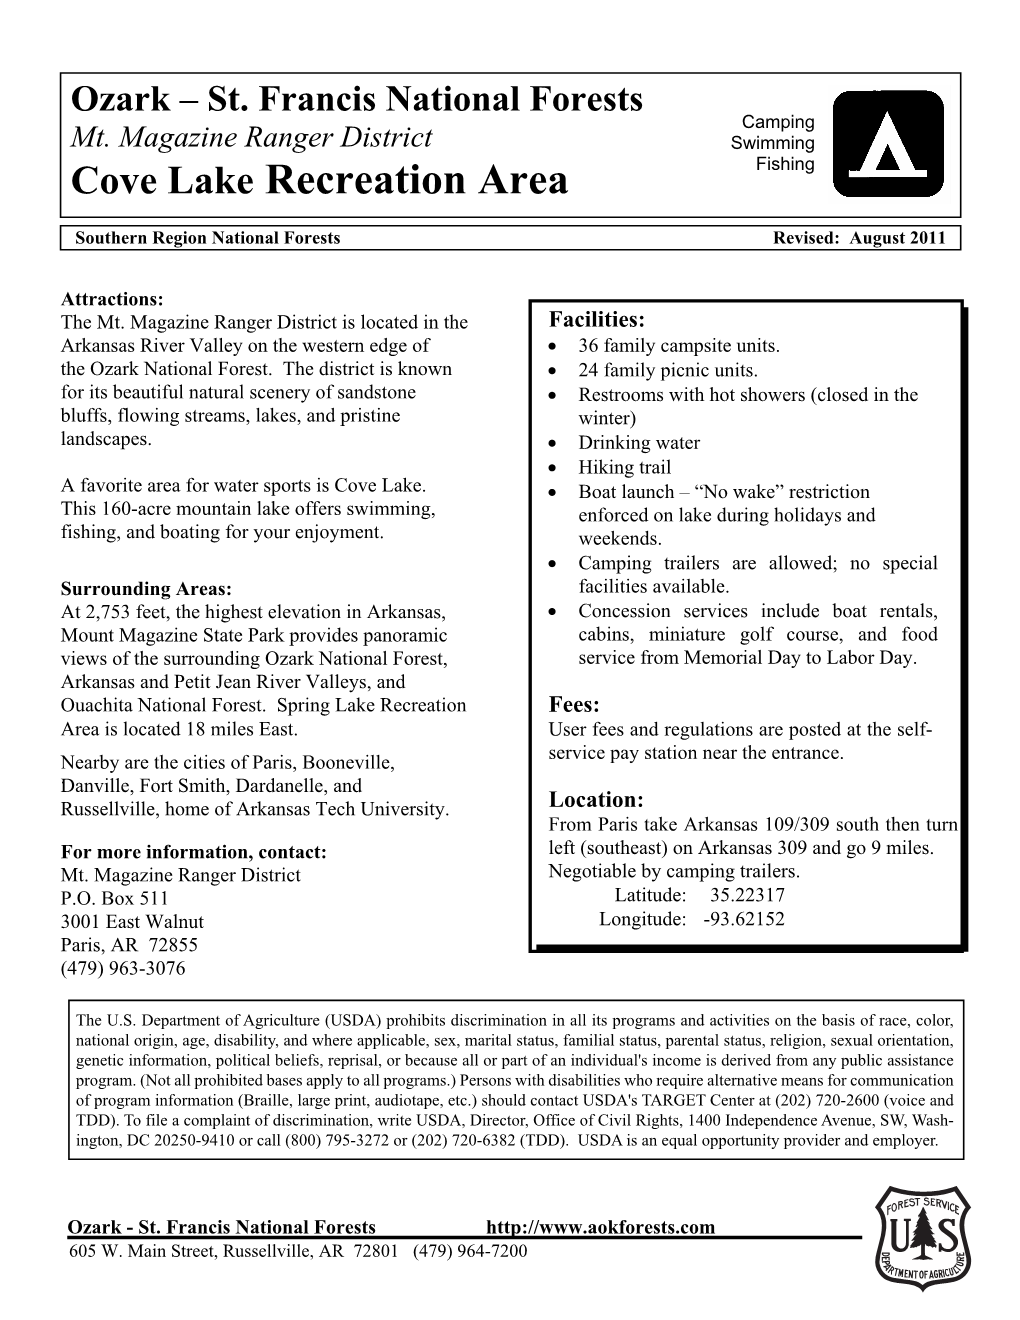 Cove Lake Recreation Area Fishing